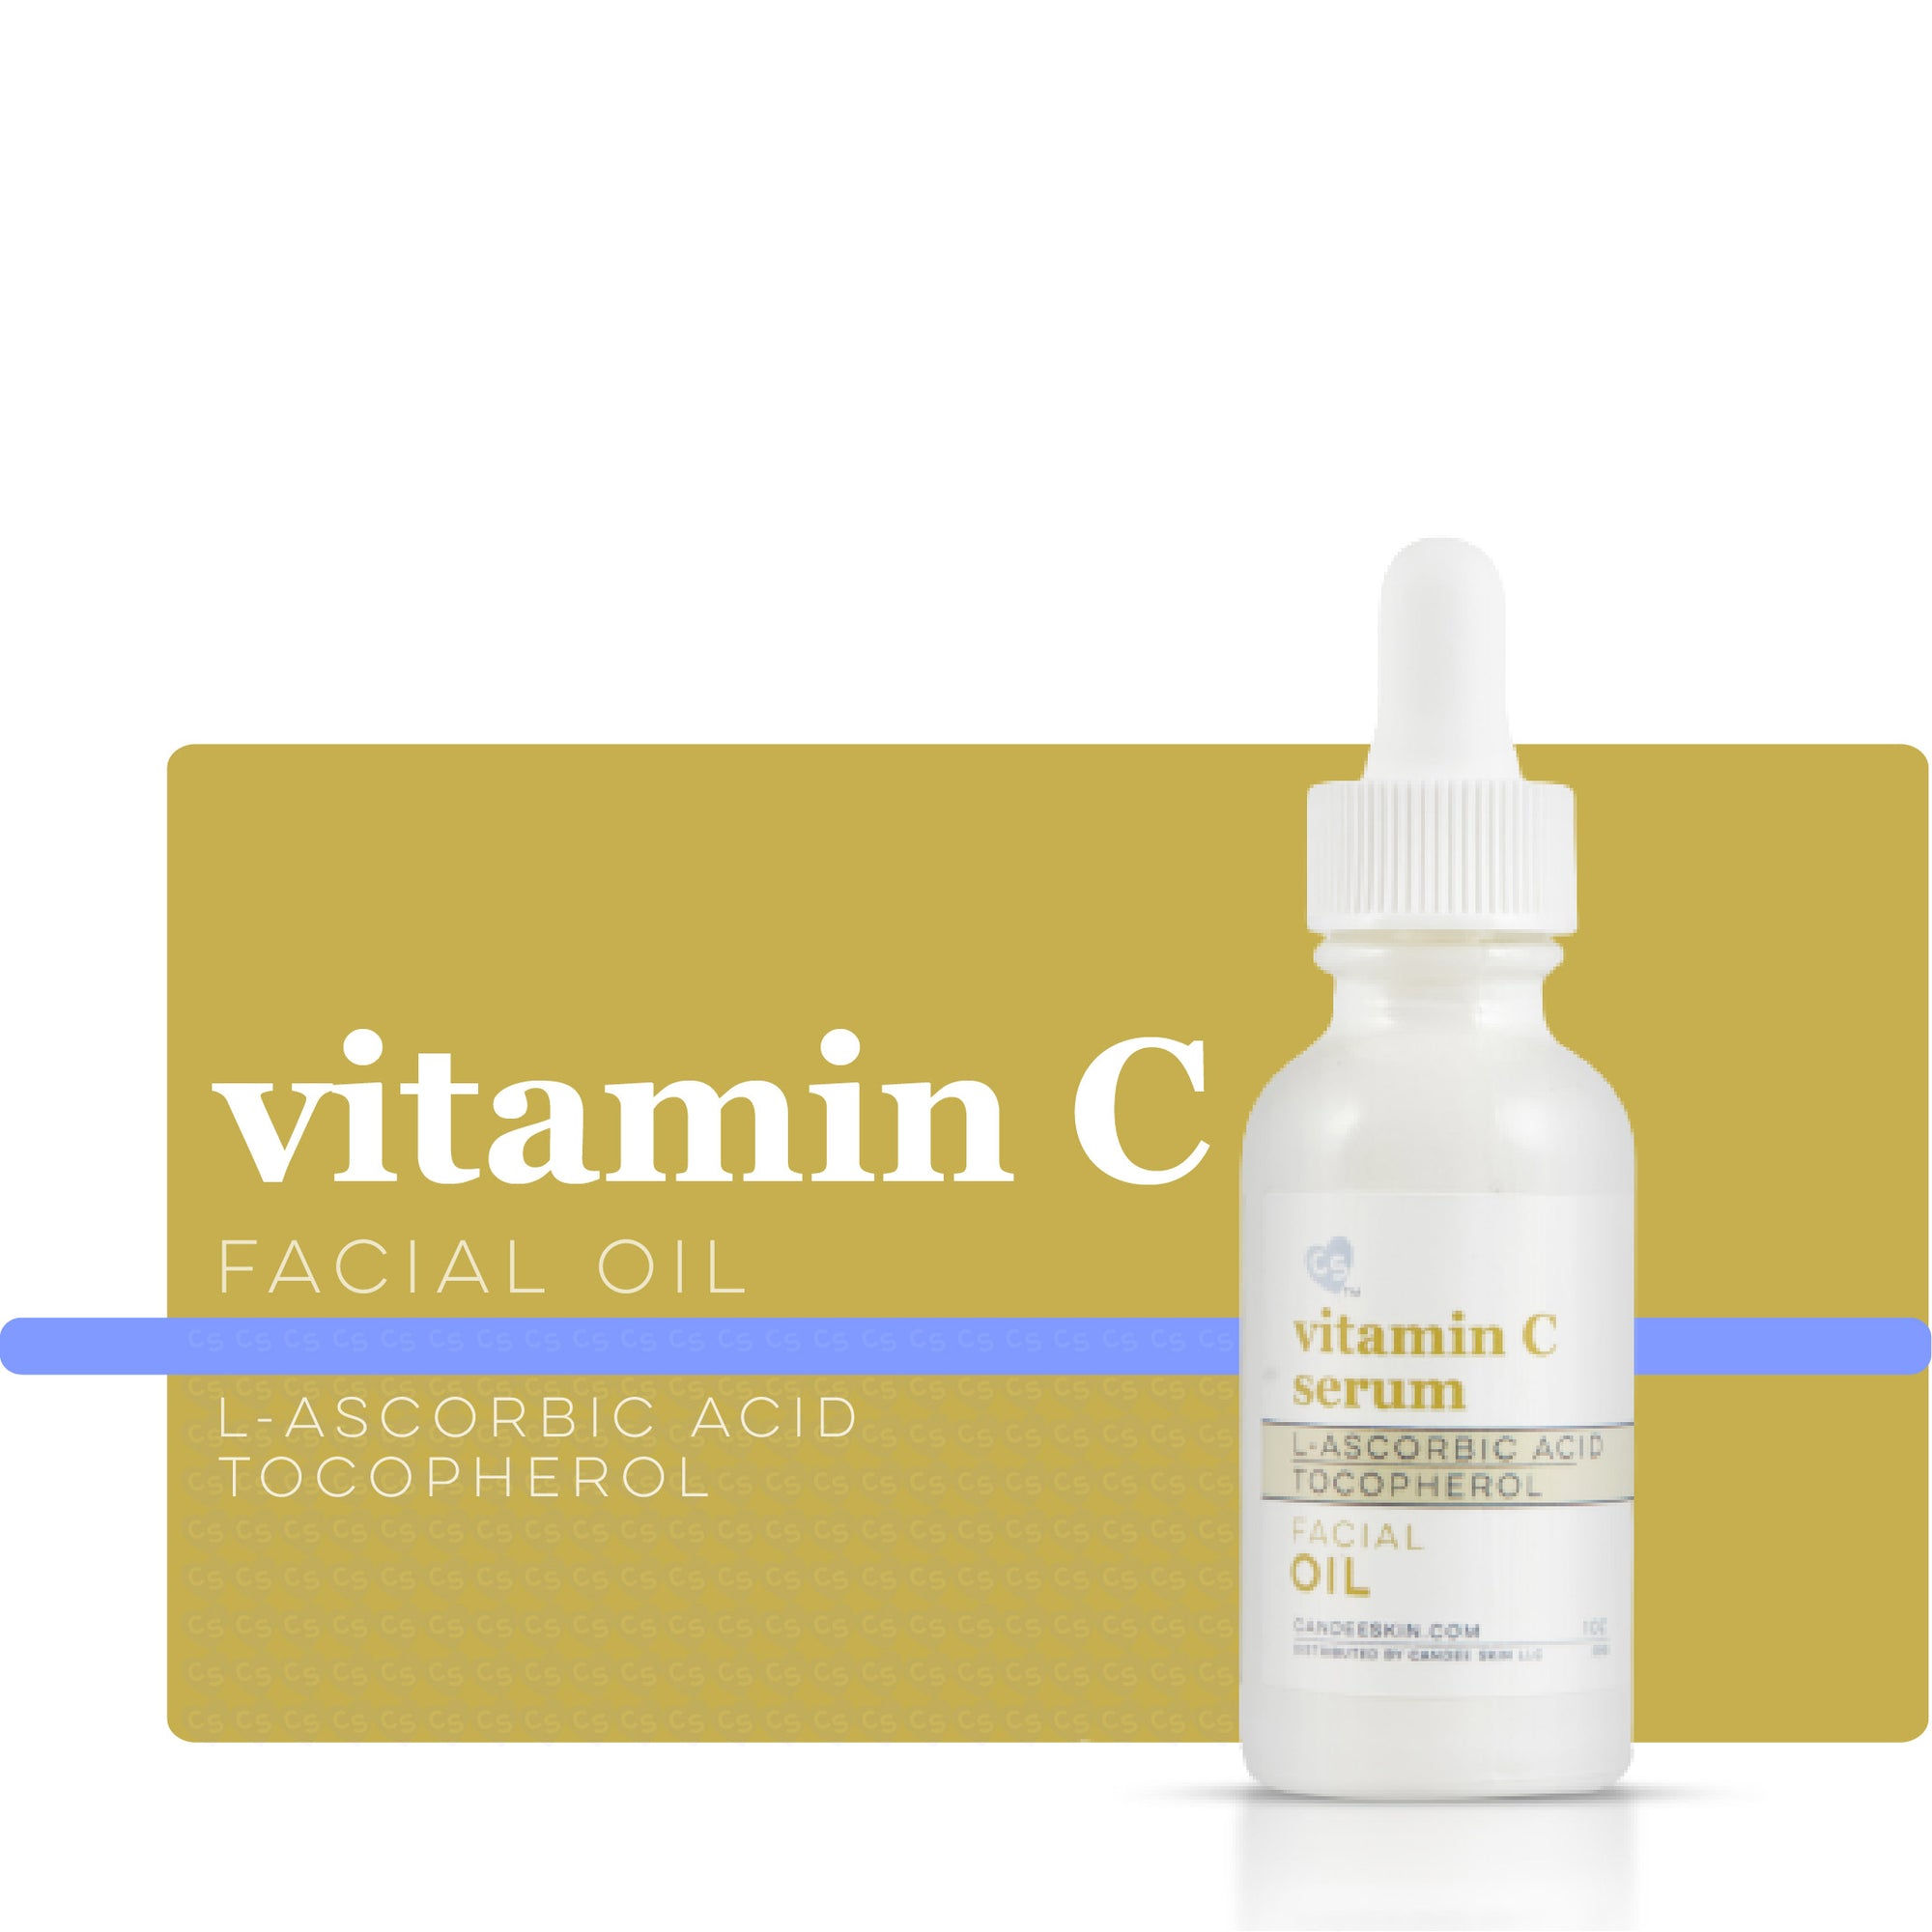 Vitamin C Serum Facial Oil. Candee Skin Shop. Skin Science Simplified.